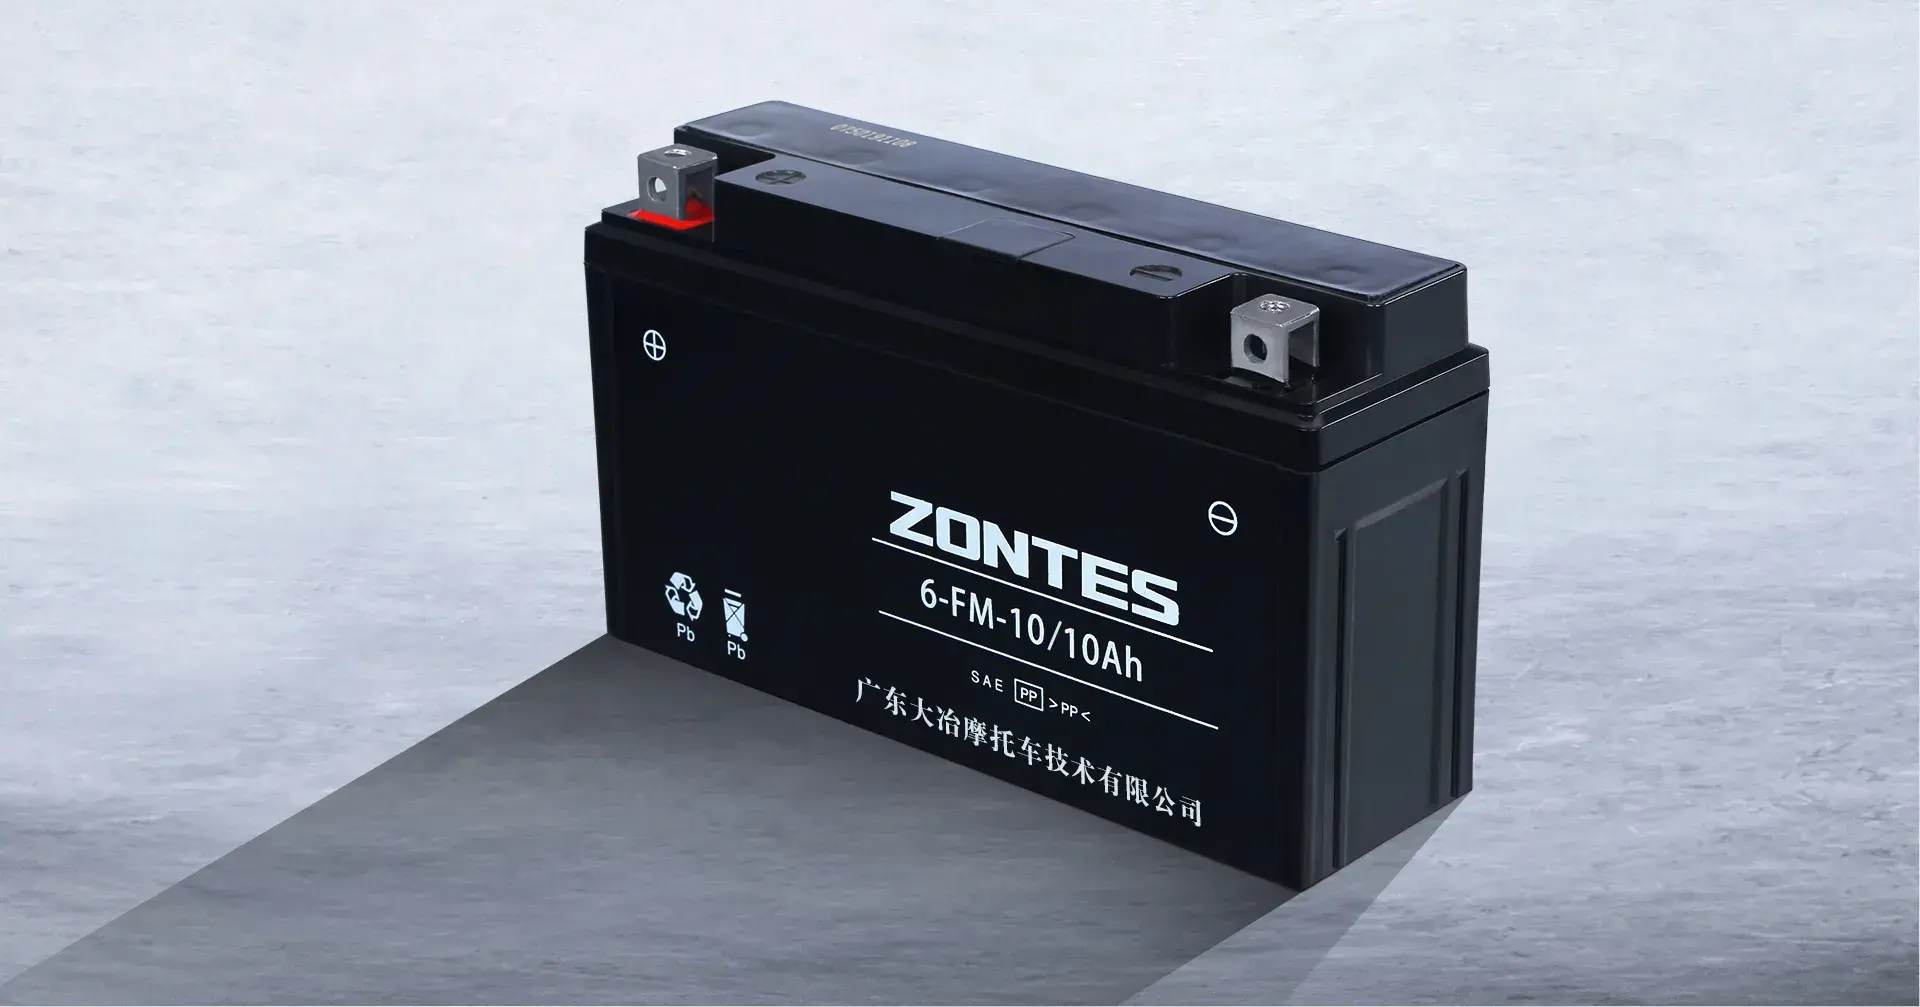 Zontes - Hypernaked 350R - bateria de gel